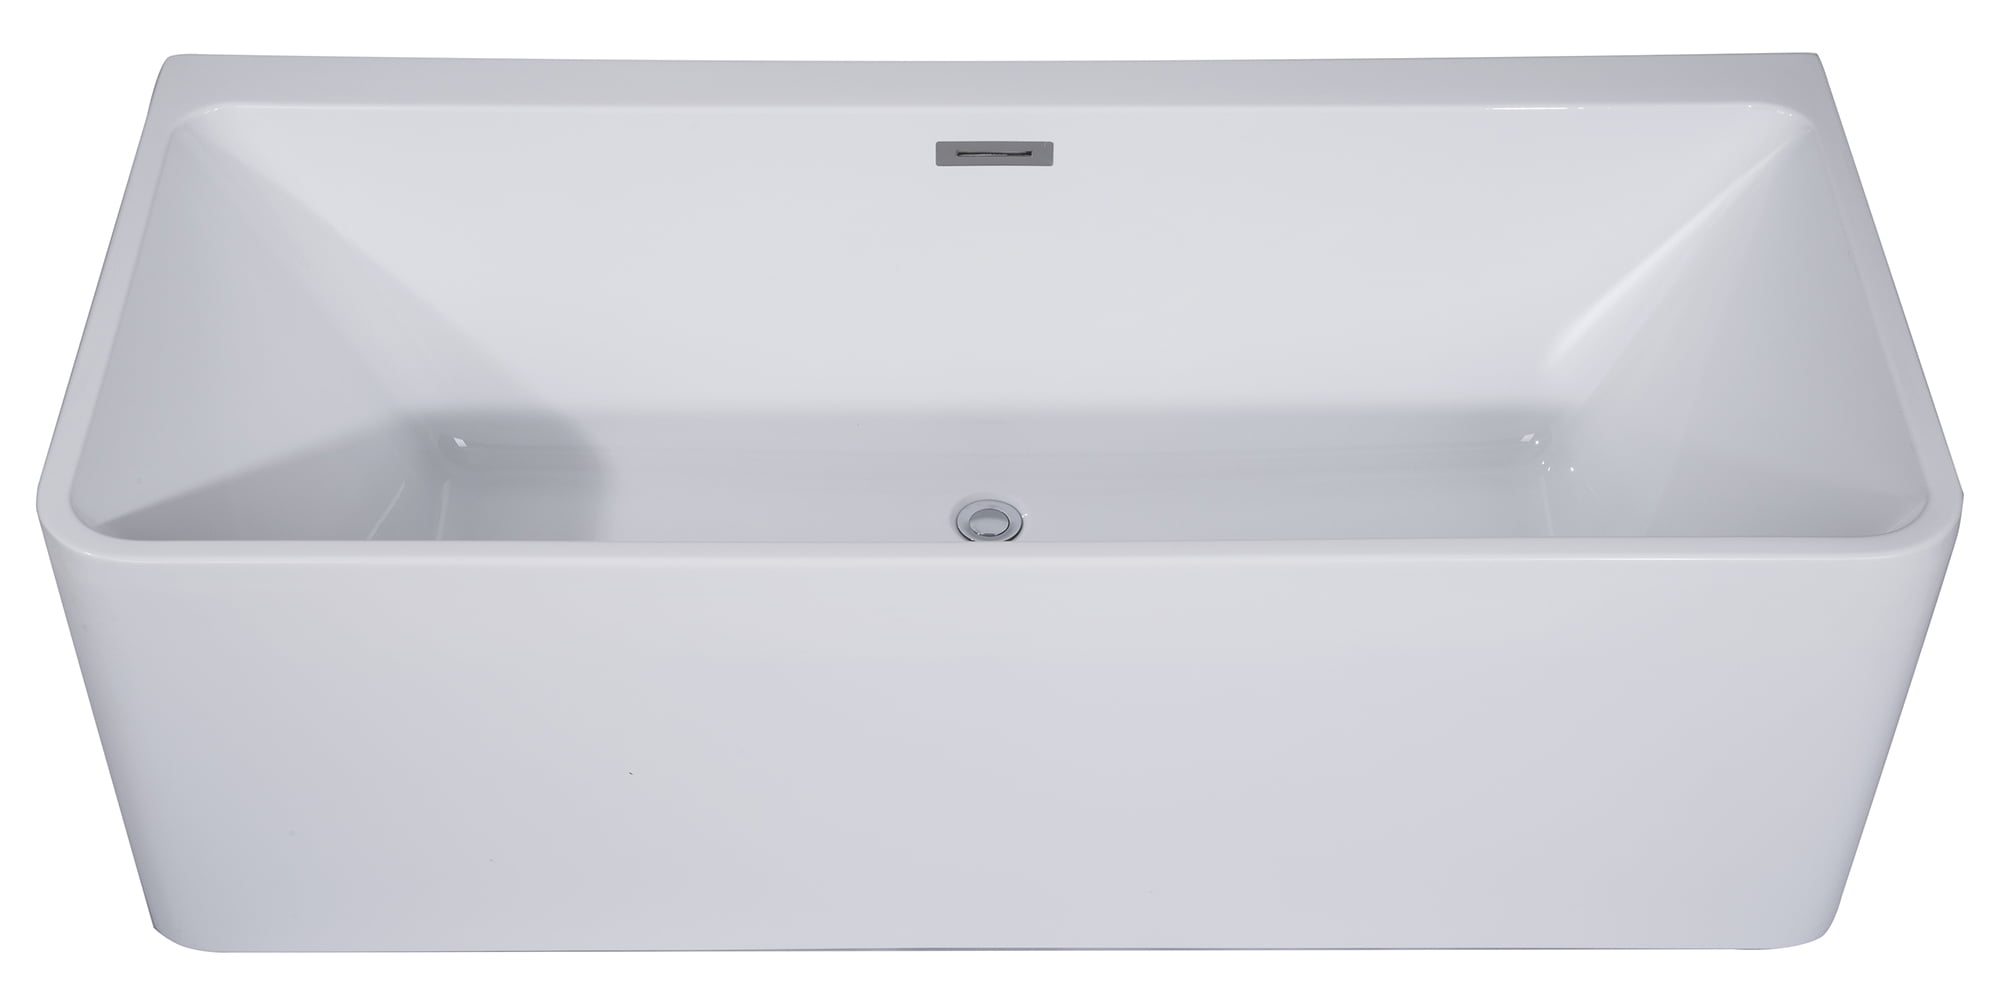 Picture of ALFI Brand AB8858 59 in. White Rectangular Acrylic Free Standing Soaking Bathtub